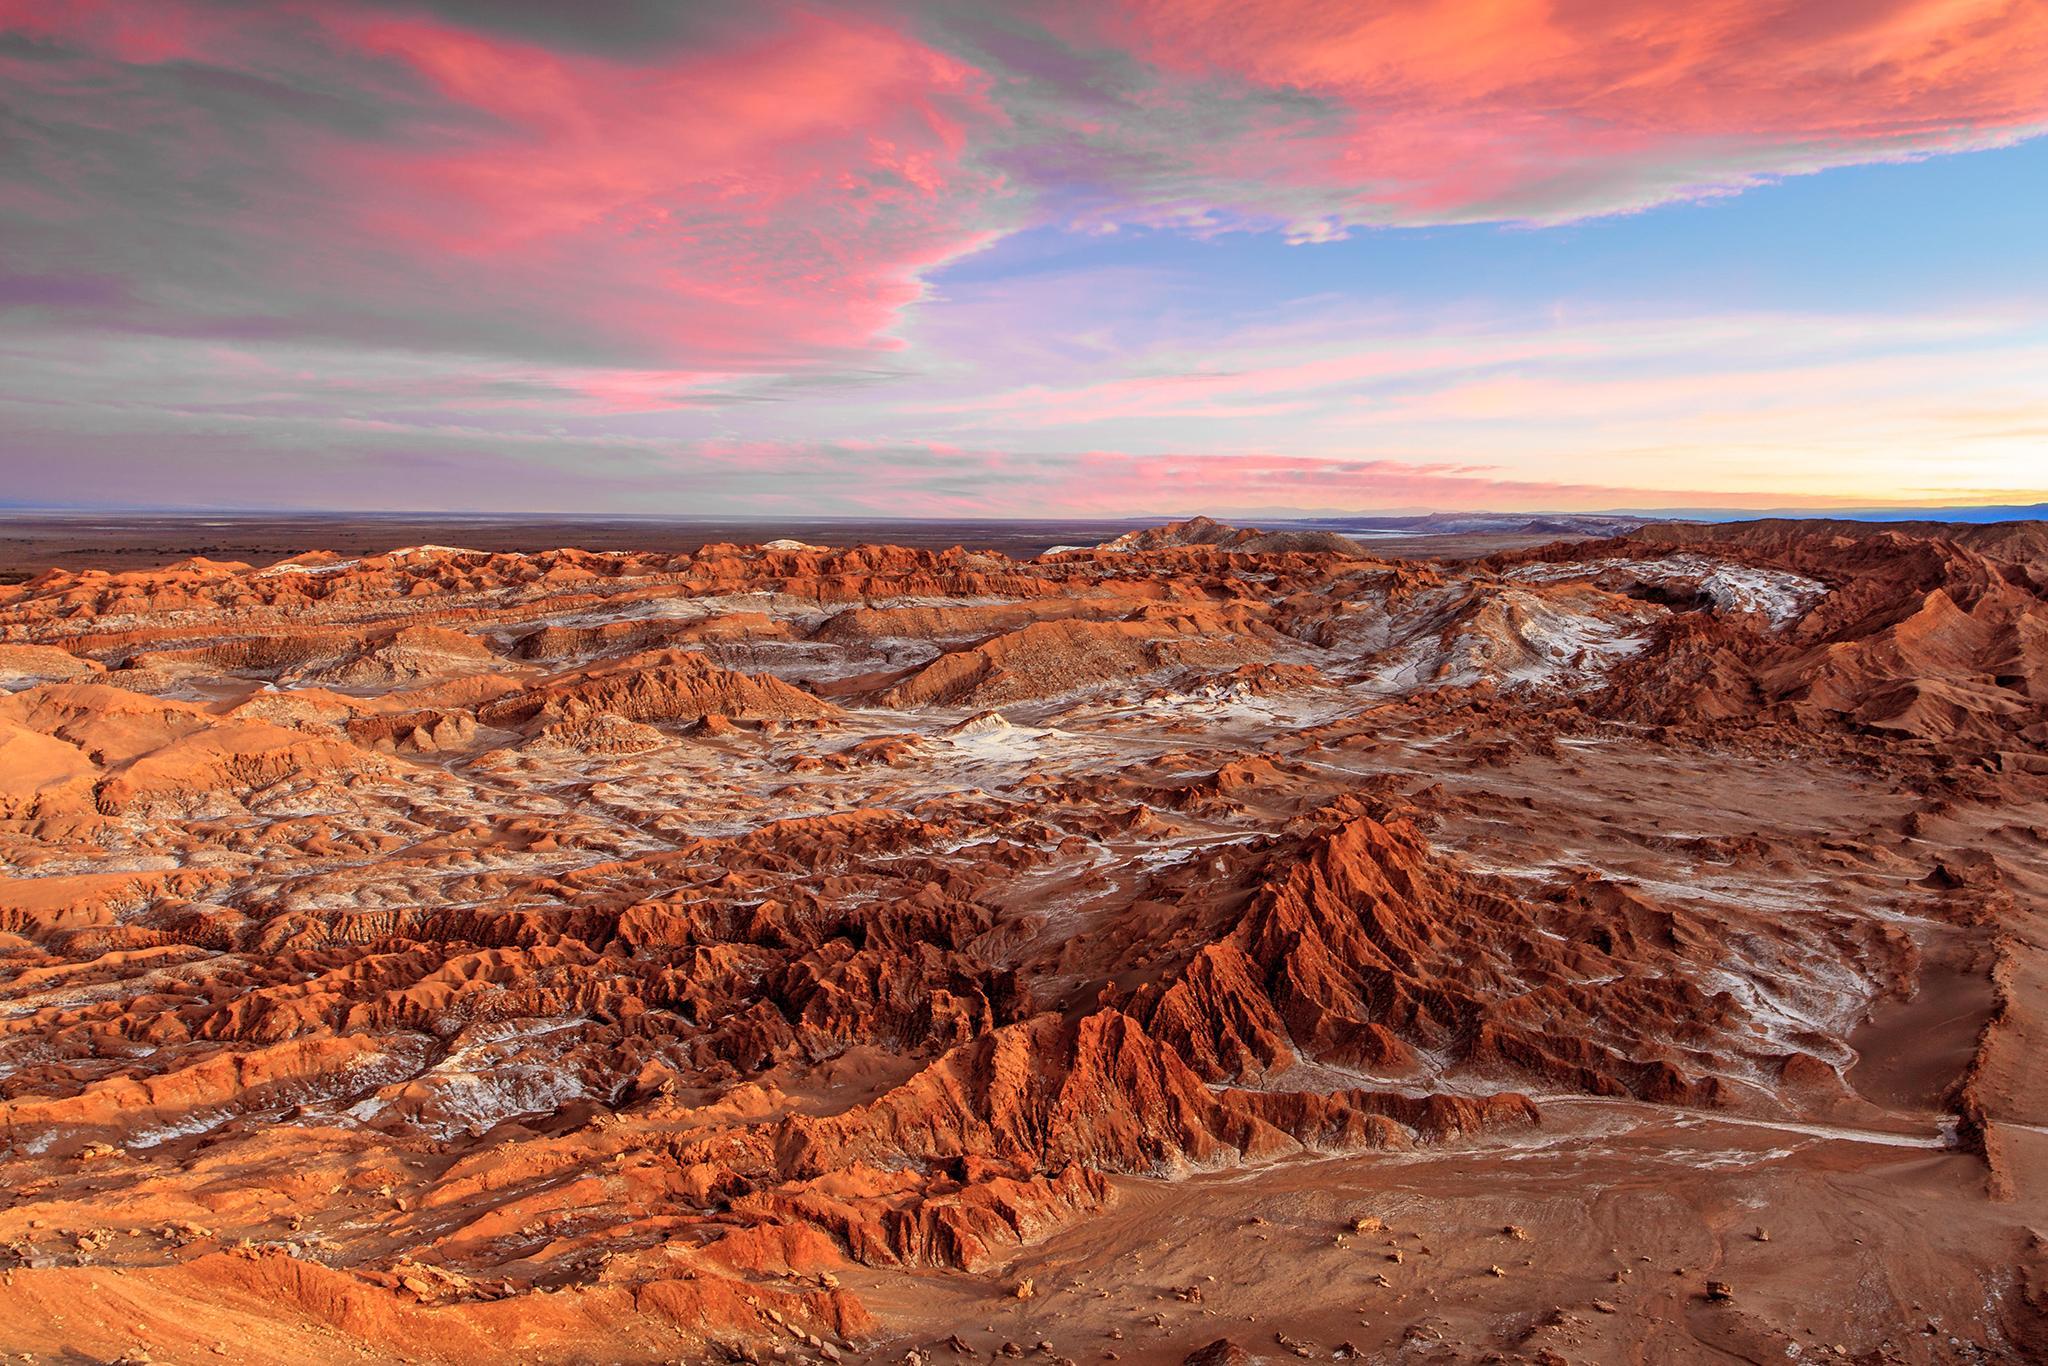 Exploring Chile's Atacama Desert